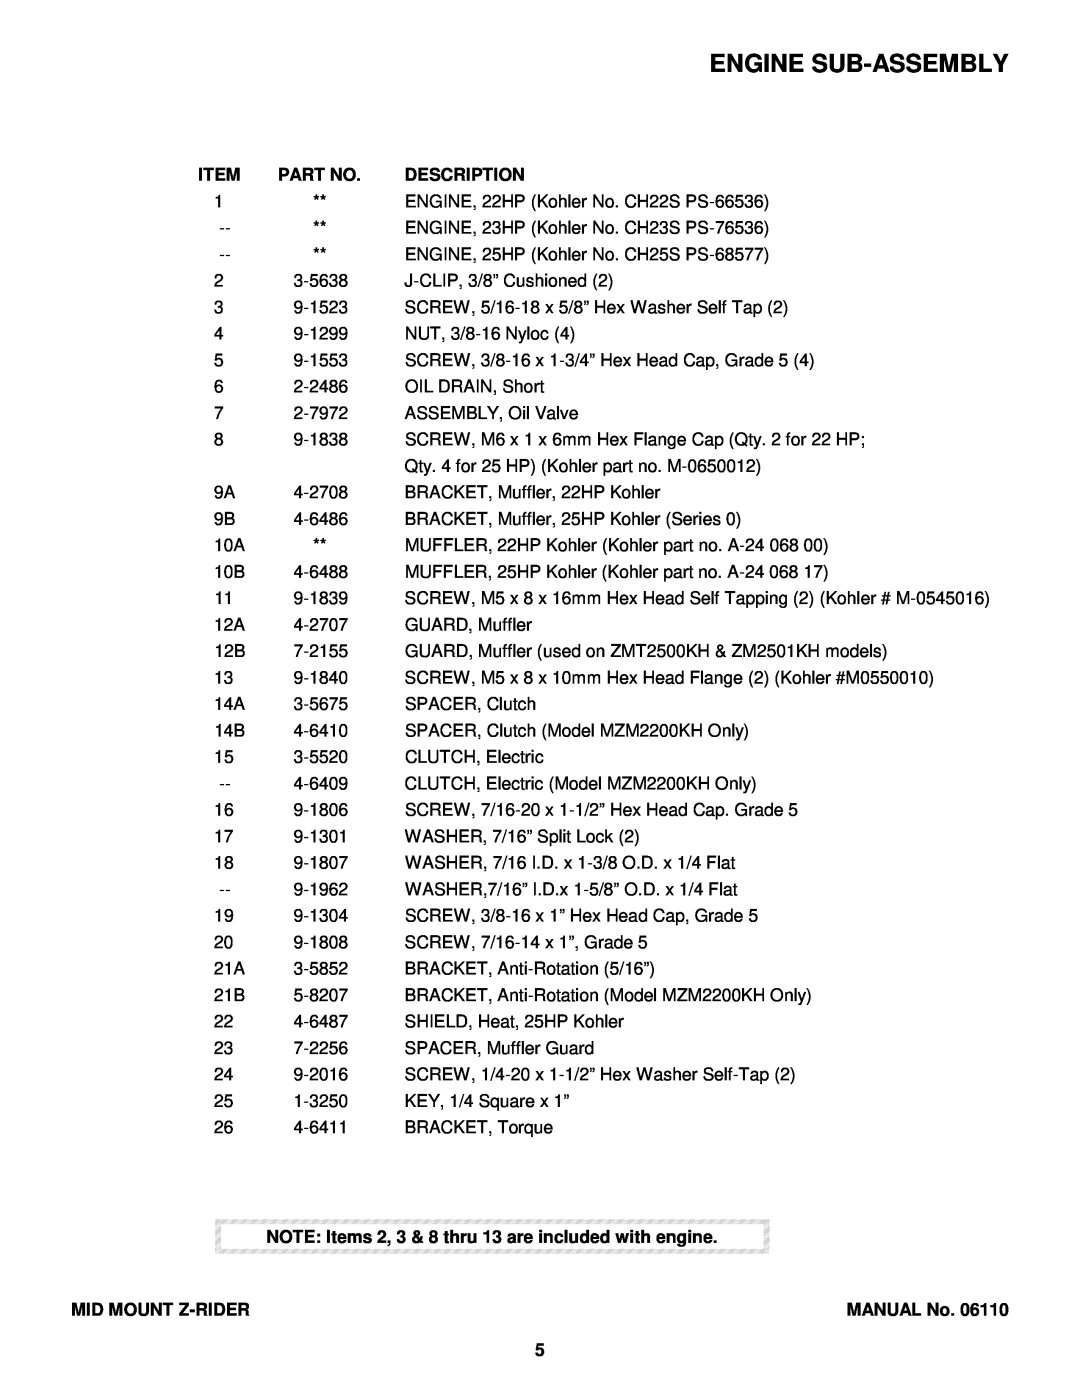 Snapper ZM6101M, MZM2200KH, MZM2300KH, MZM2301KH, ZM6102M manual Engine Sub-Assembly, Description, Mid Mount Z-Rider, MANUAL No 